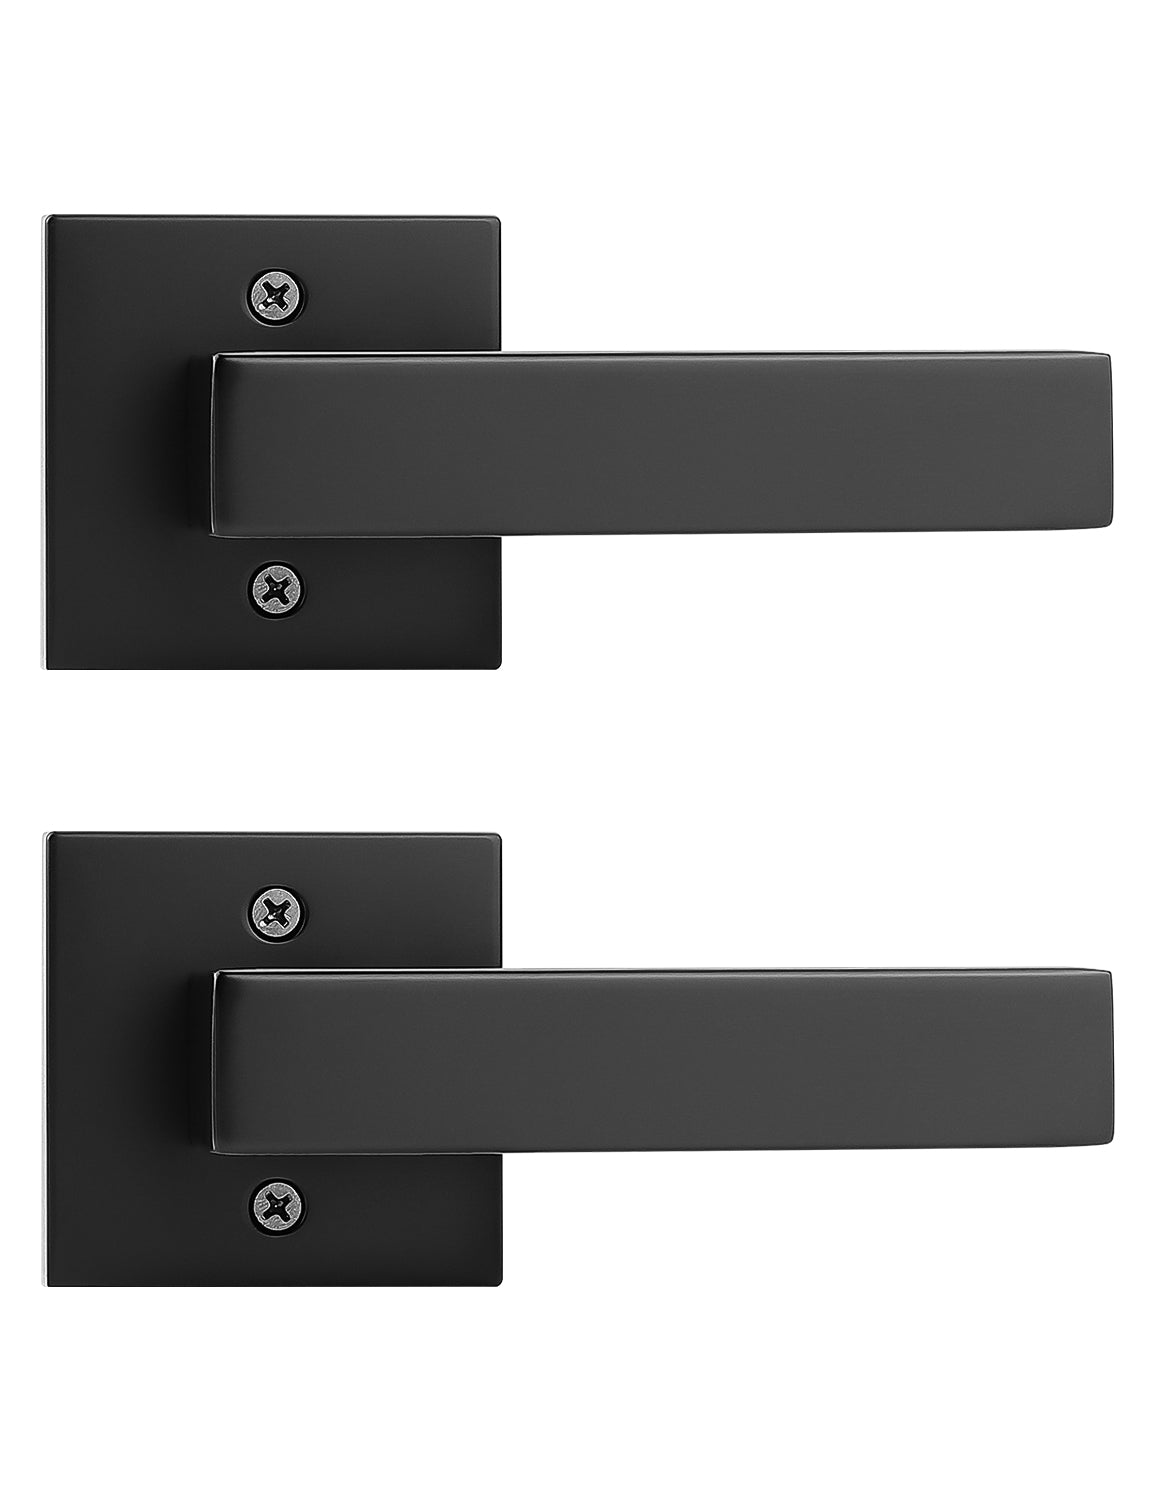 Tinewa 2 Pack Black Keyless Square Levers Handles, Interior Dummy Door Locksets for Hall Closet Door Knobs Lock Reversible Right & Left Handed